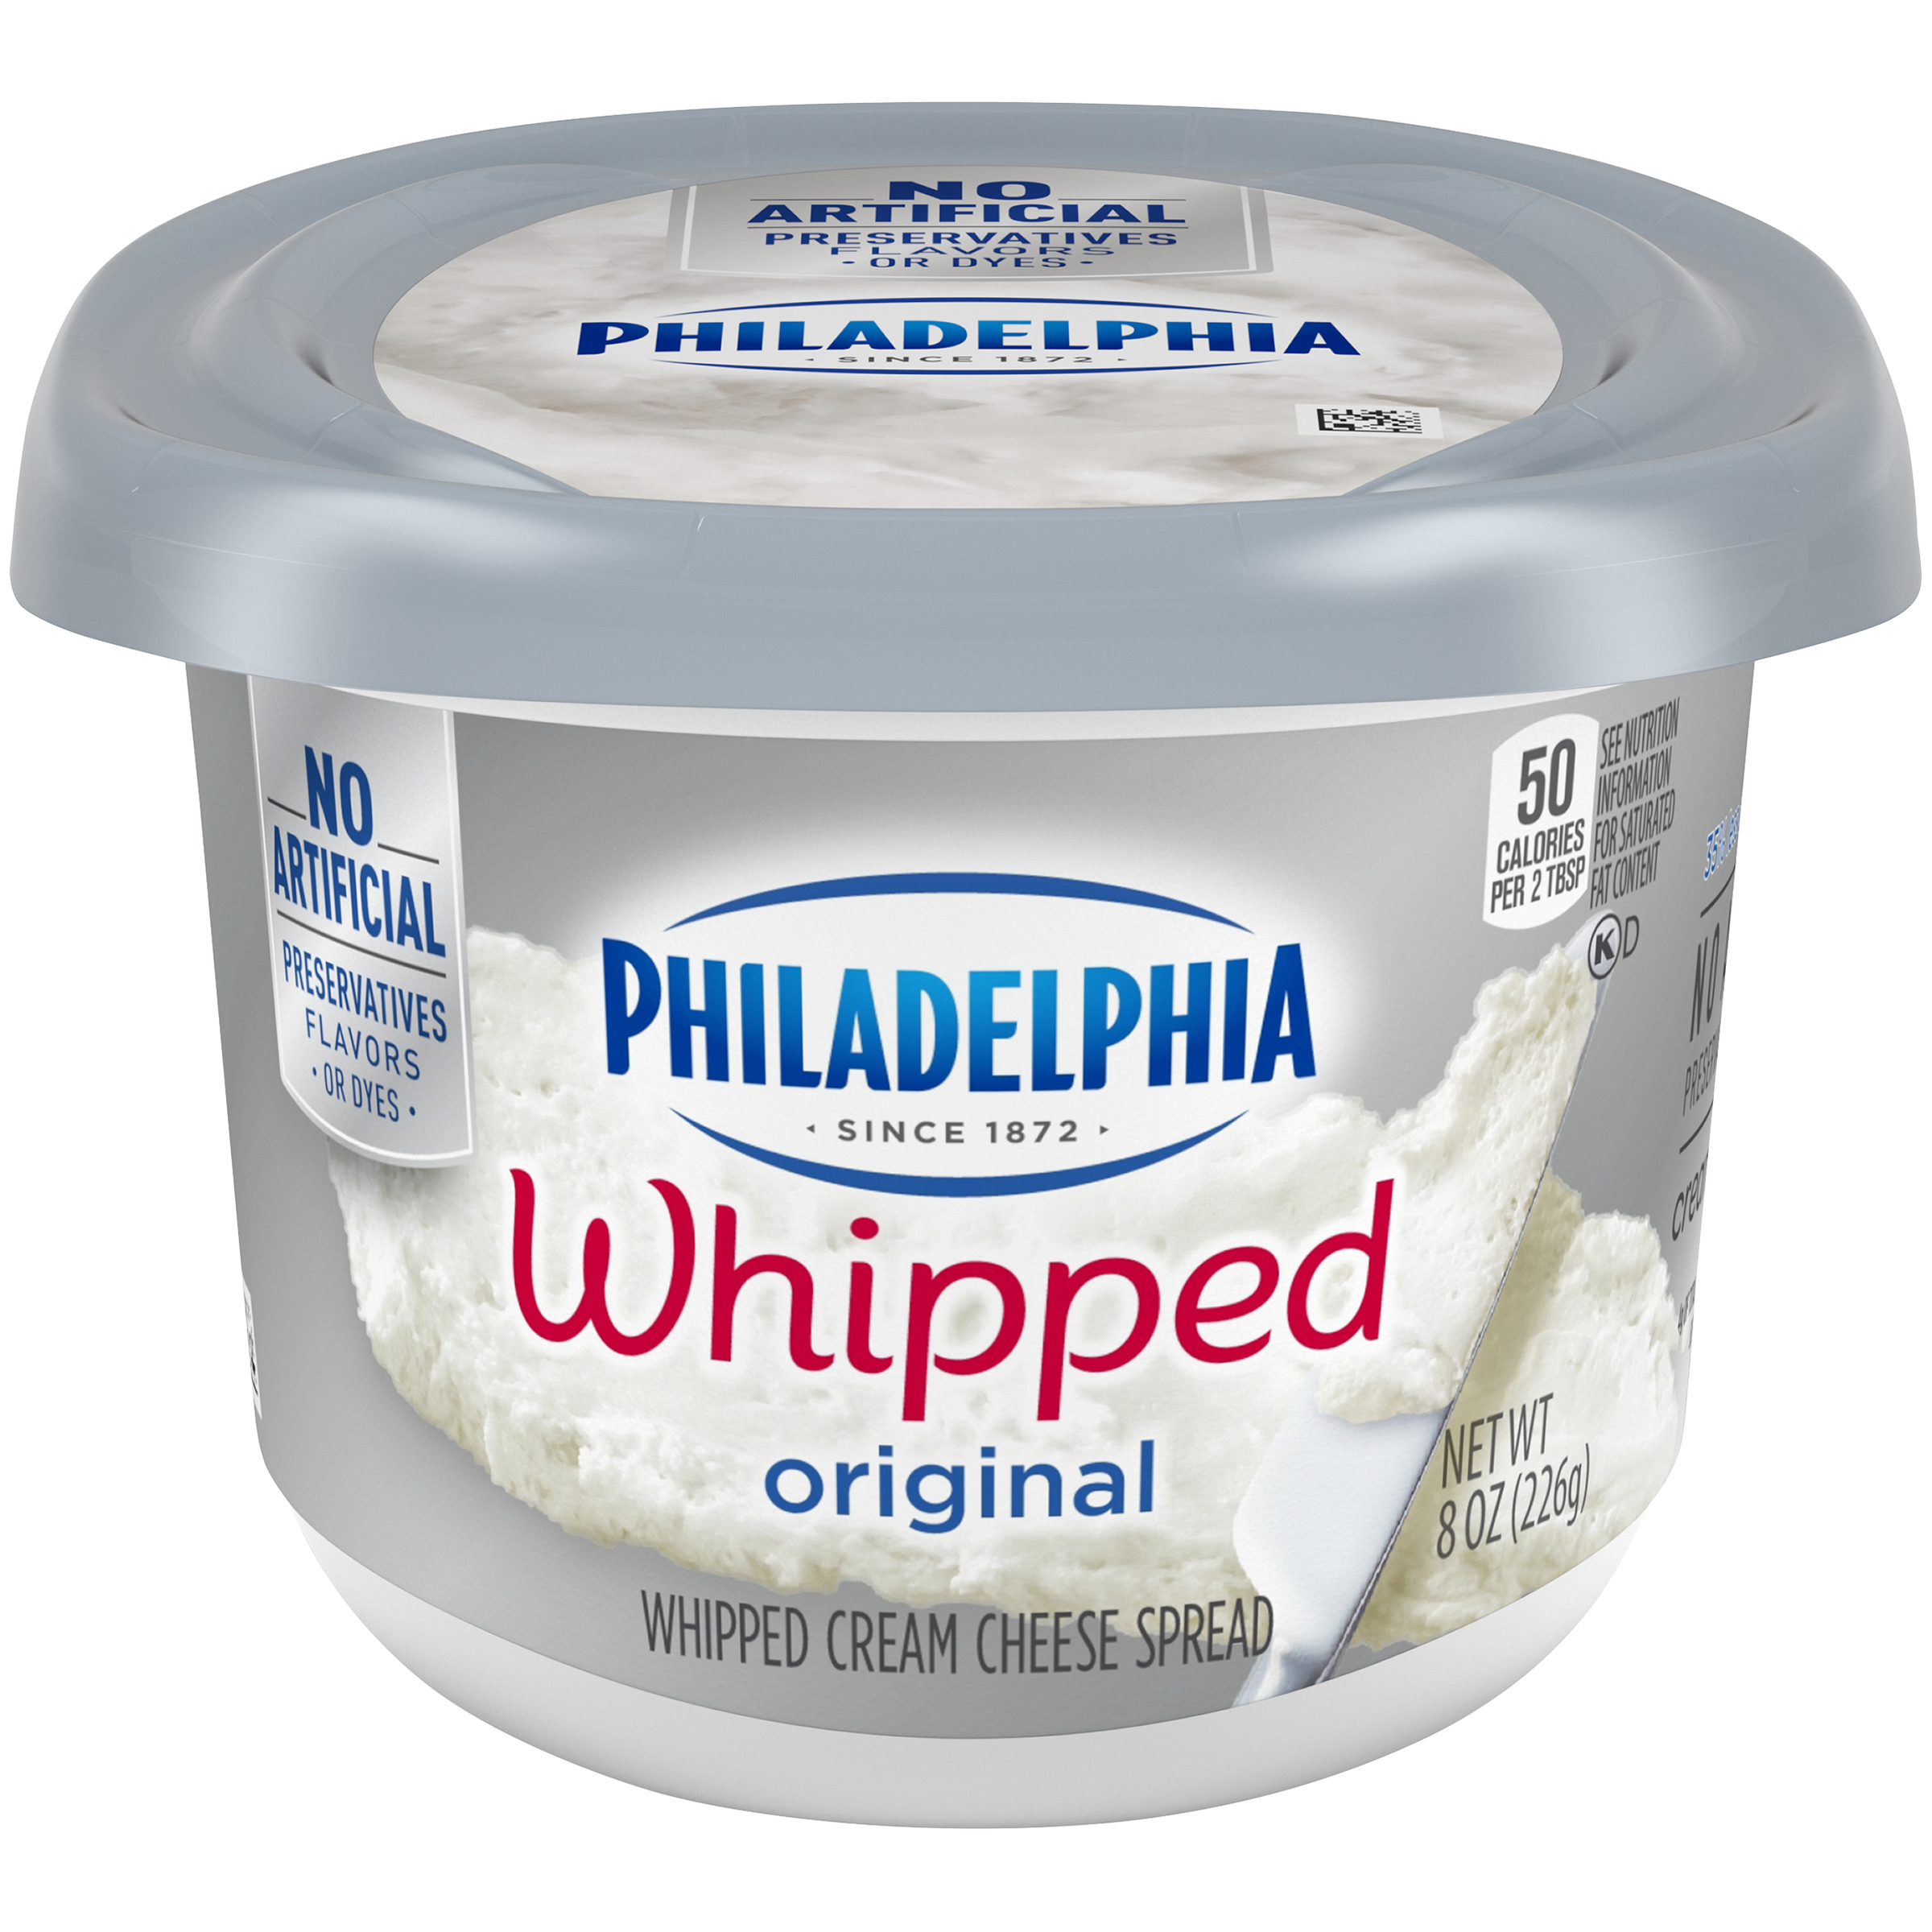 Philadelphia Plain Whipped Cream Cheese Spread 8 oz Tub - My Food and Family